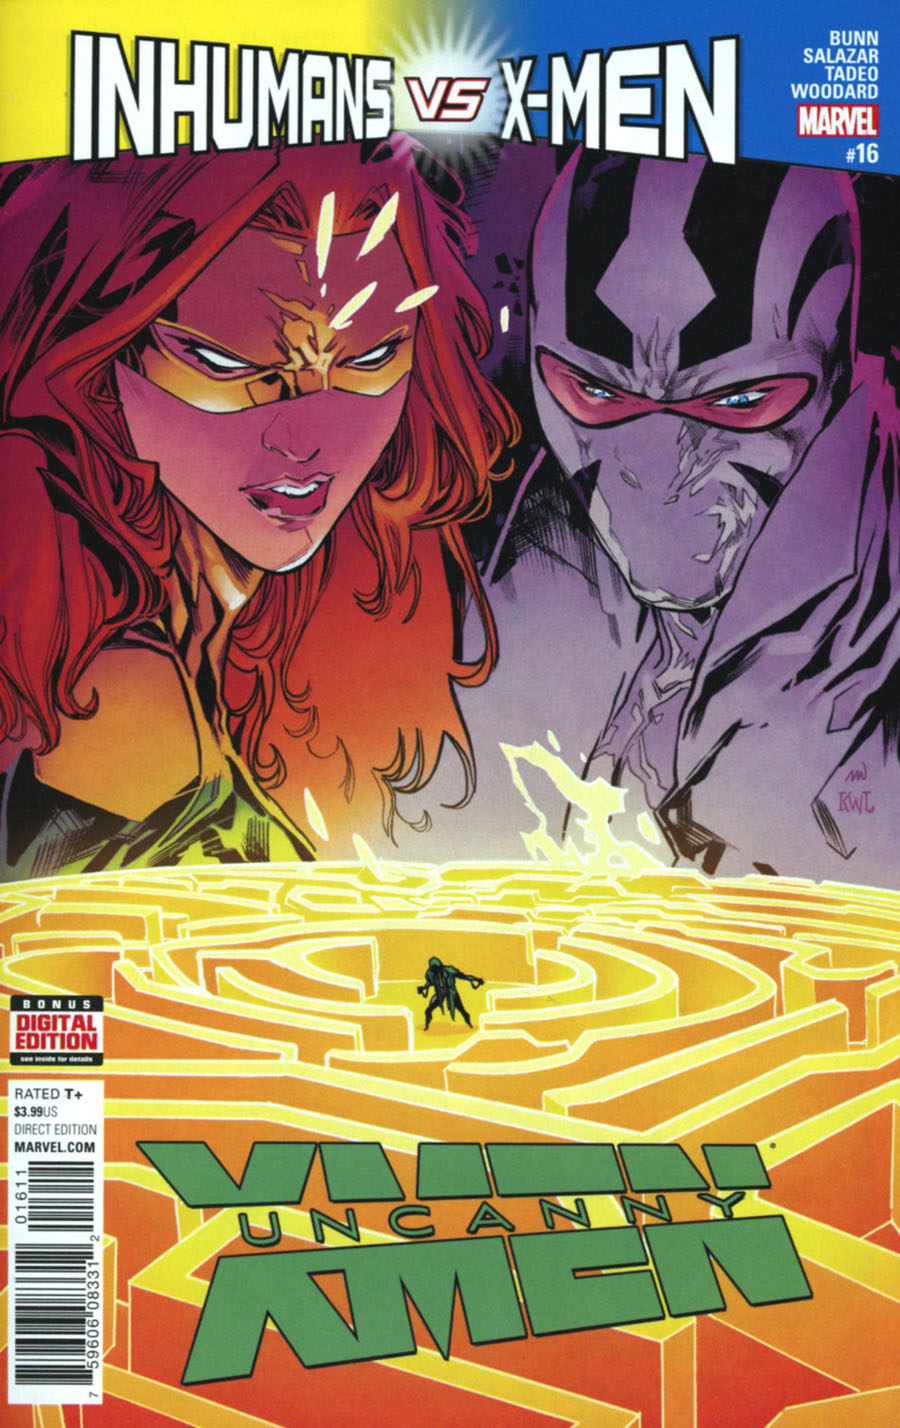 Uncanny X-Men Vol 4 #16 Cover A Regular Ken Lashley Cover (Inhumans vs X-Men Tie-In)